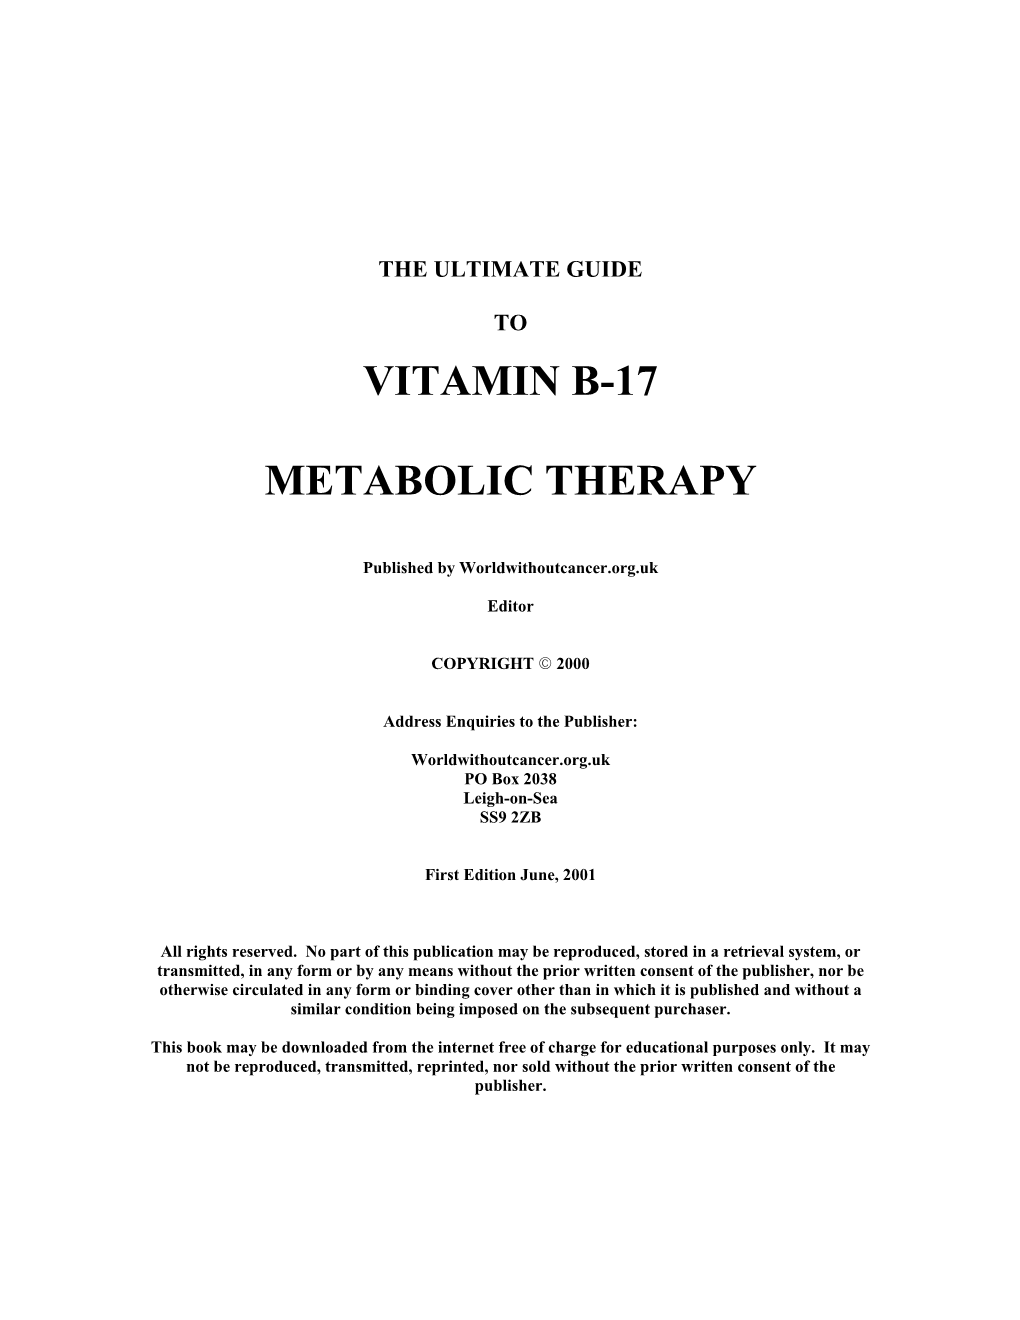 Vitamin B-17 Metabolic Therapy